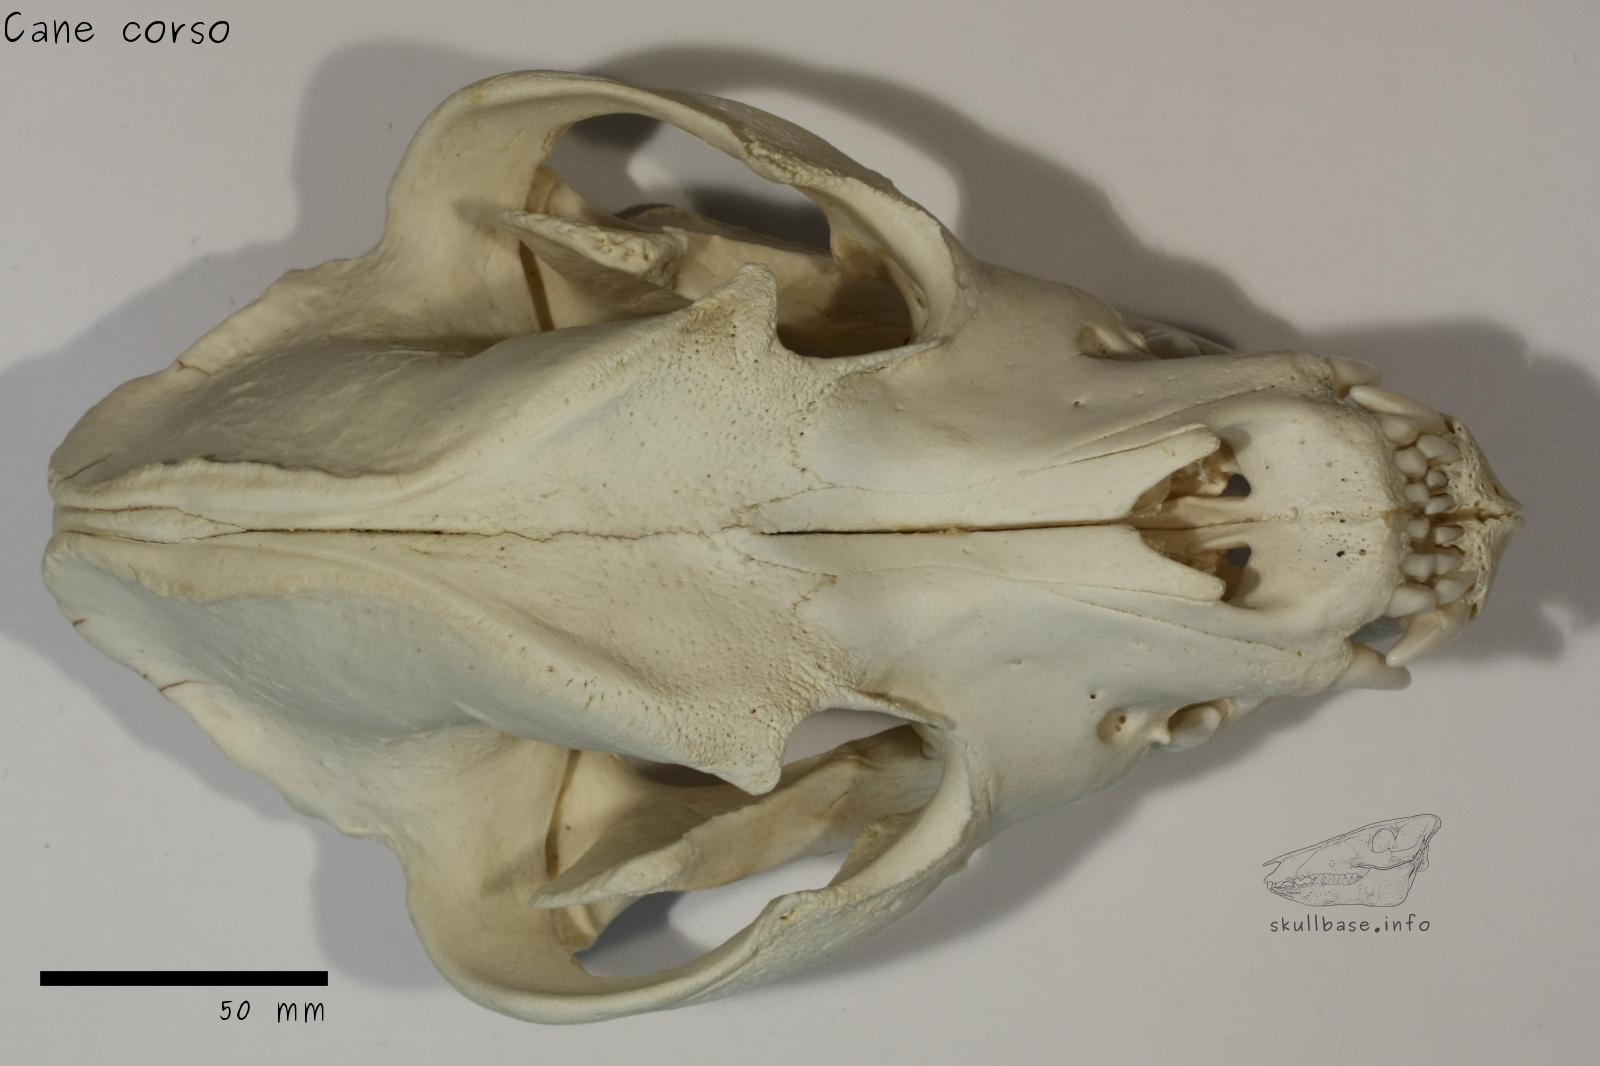 Cane corso (Canis lupus familiaris) skull dorsal view